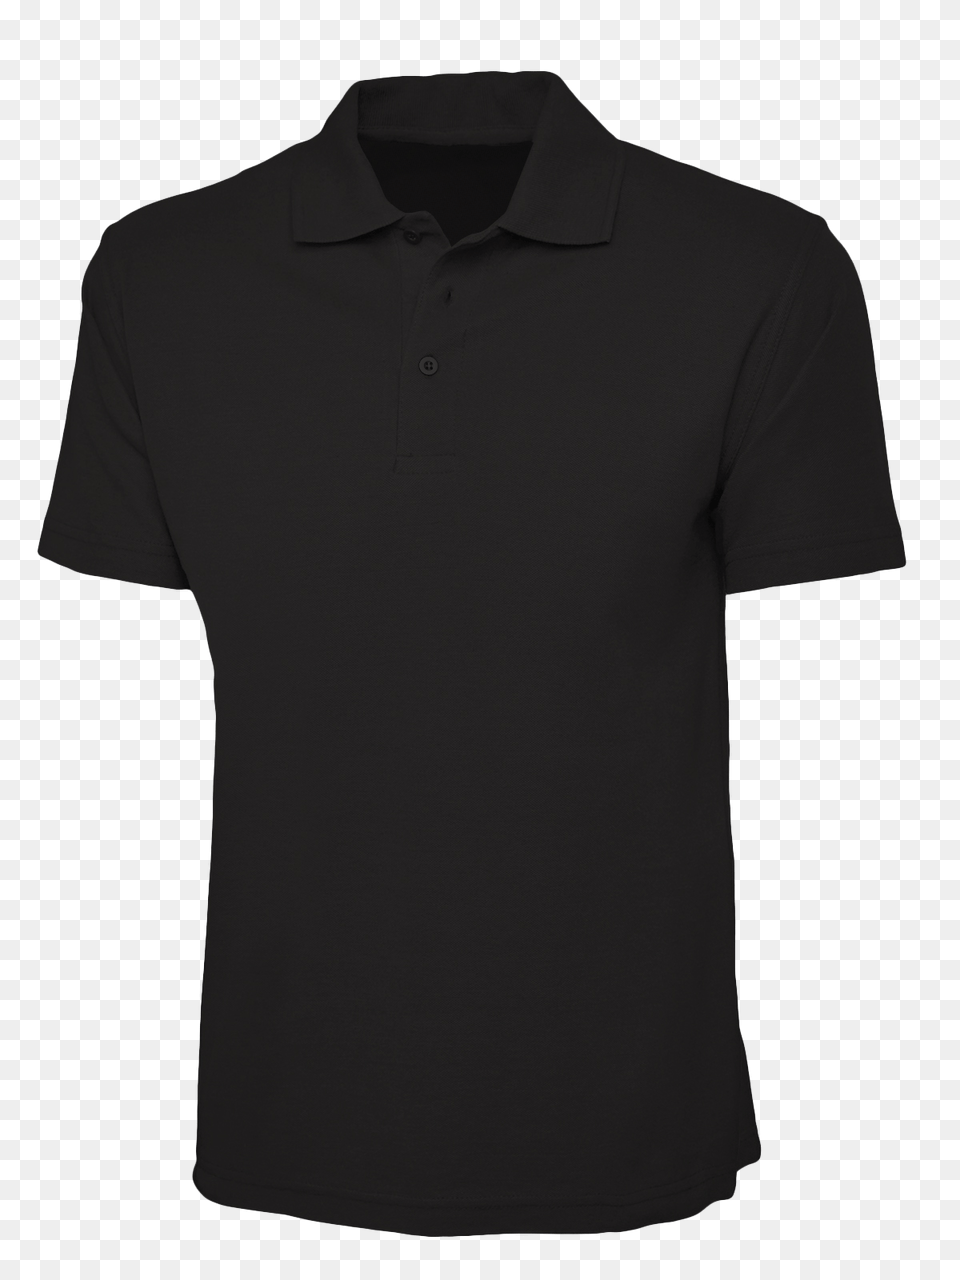 Black Polo Shirt Clothing, T-shirt, Sleeve Png Image